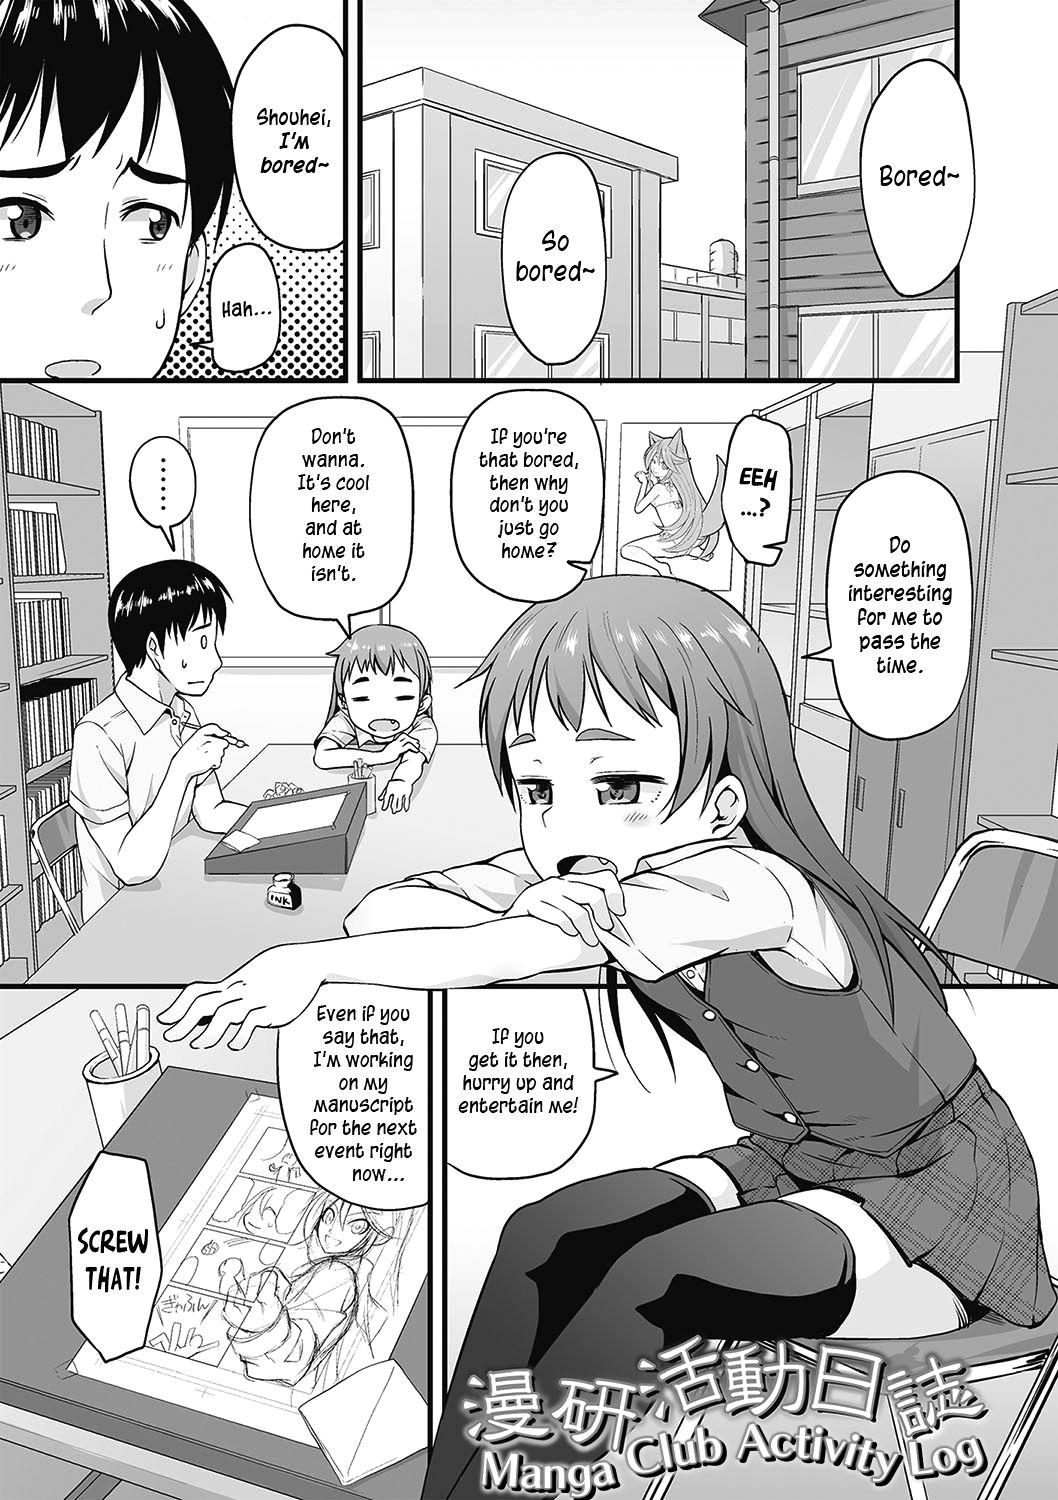 Manga Club Activity Log 1